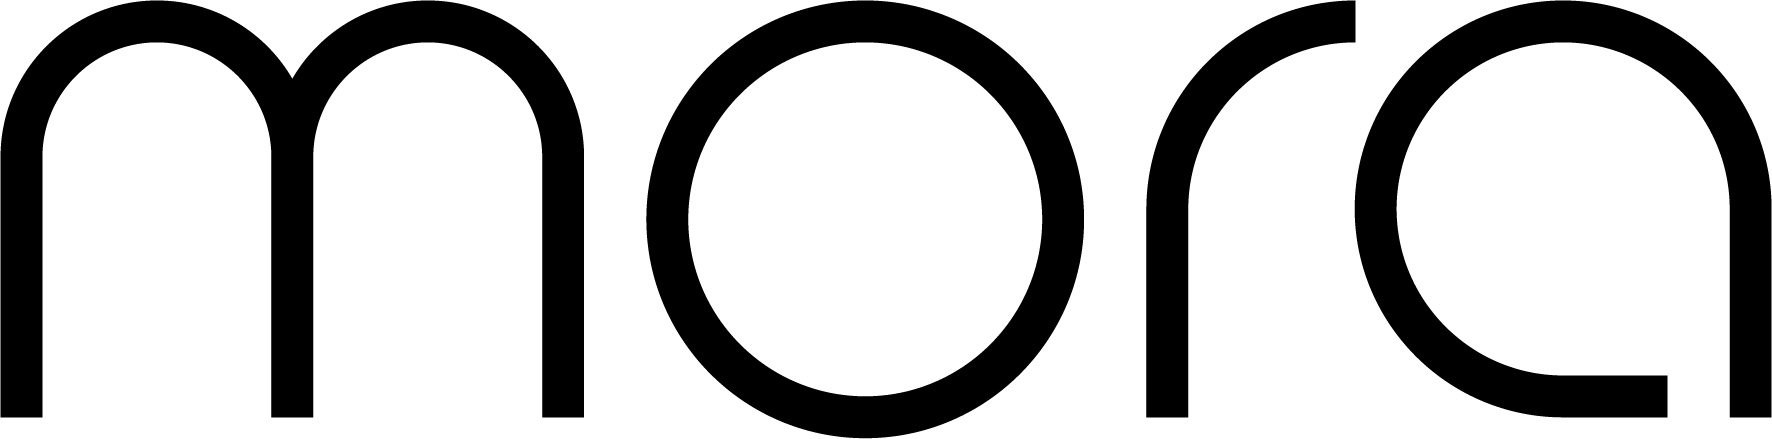 Mora Armatur logo